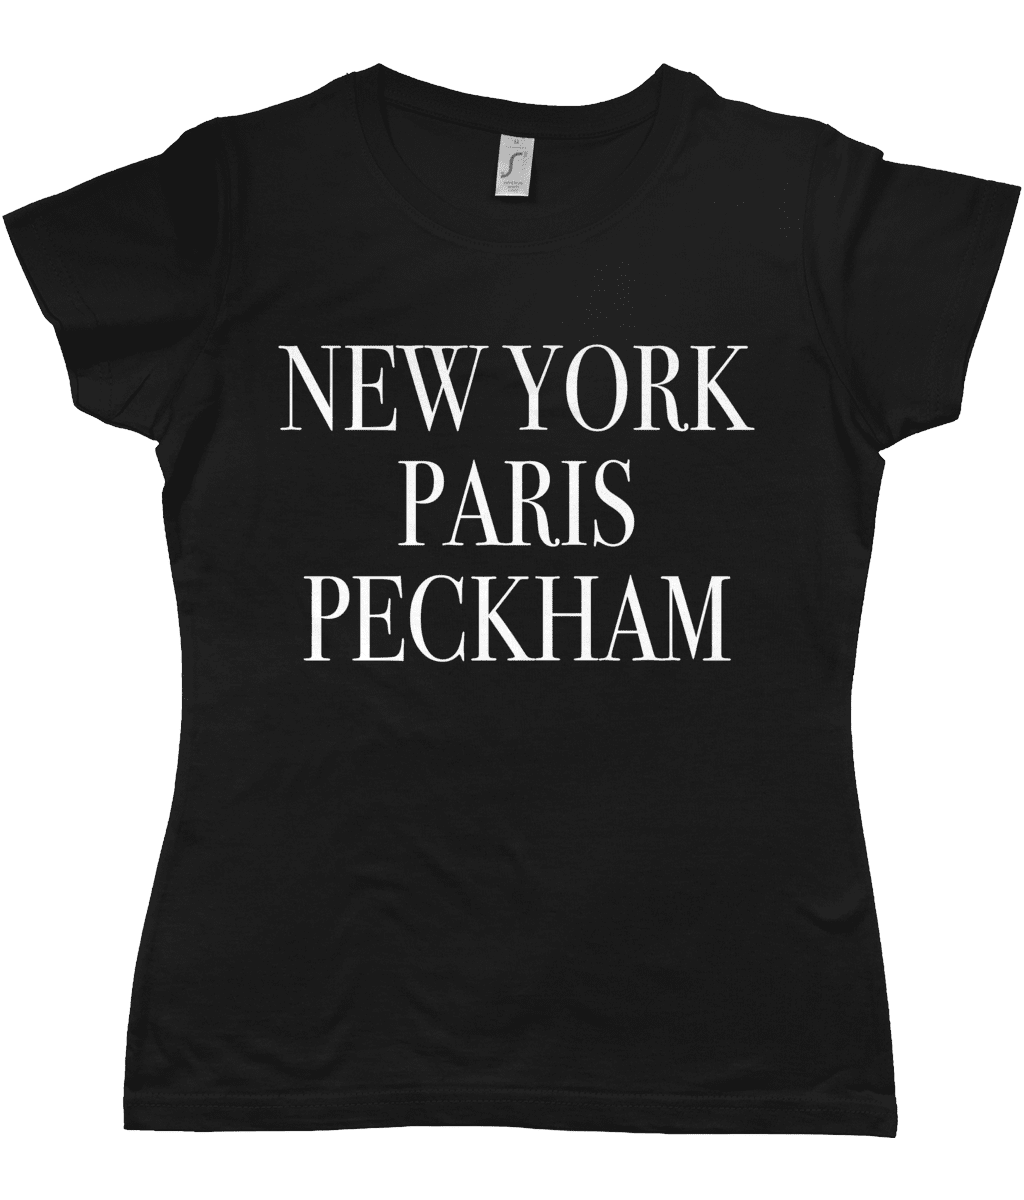 New York Paris Peckham Only Fools and Horses T-Shirt Black